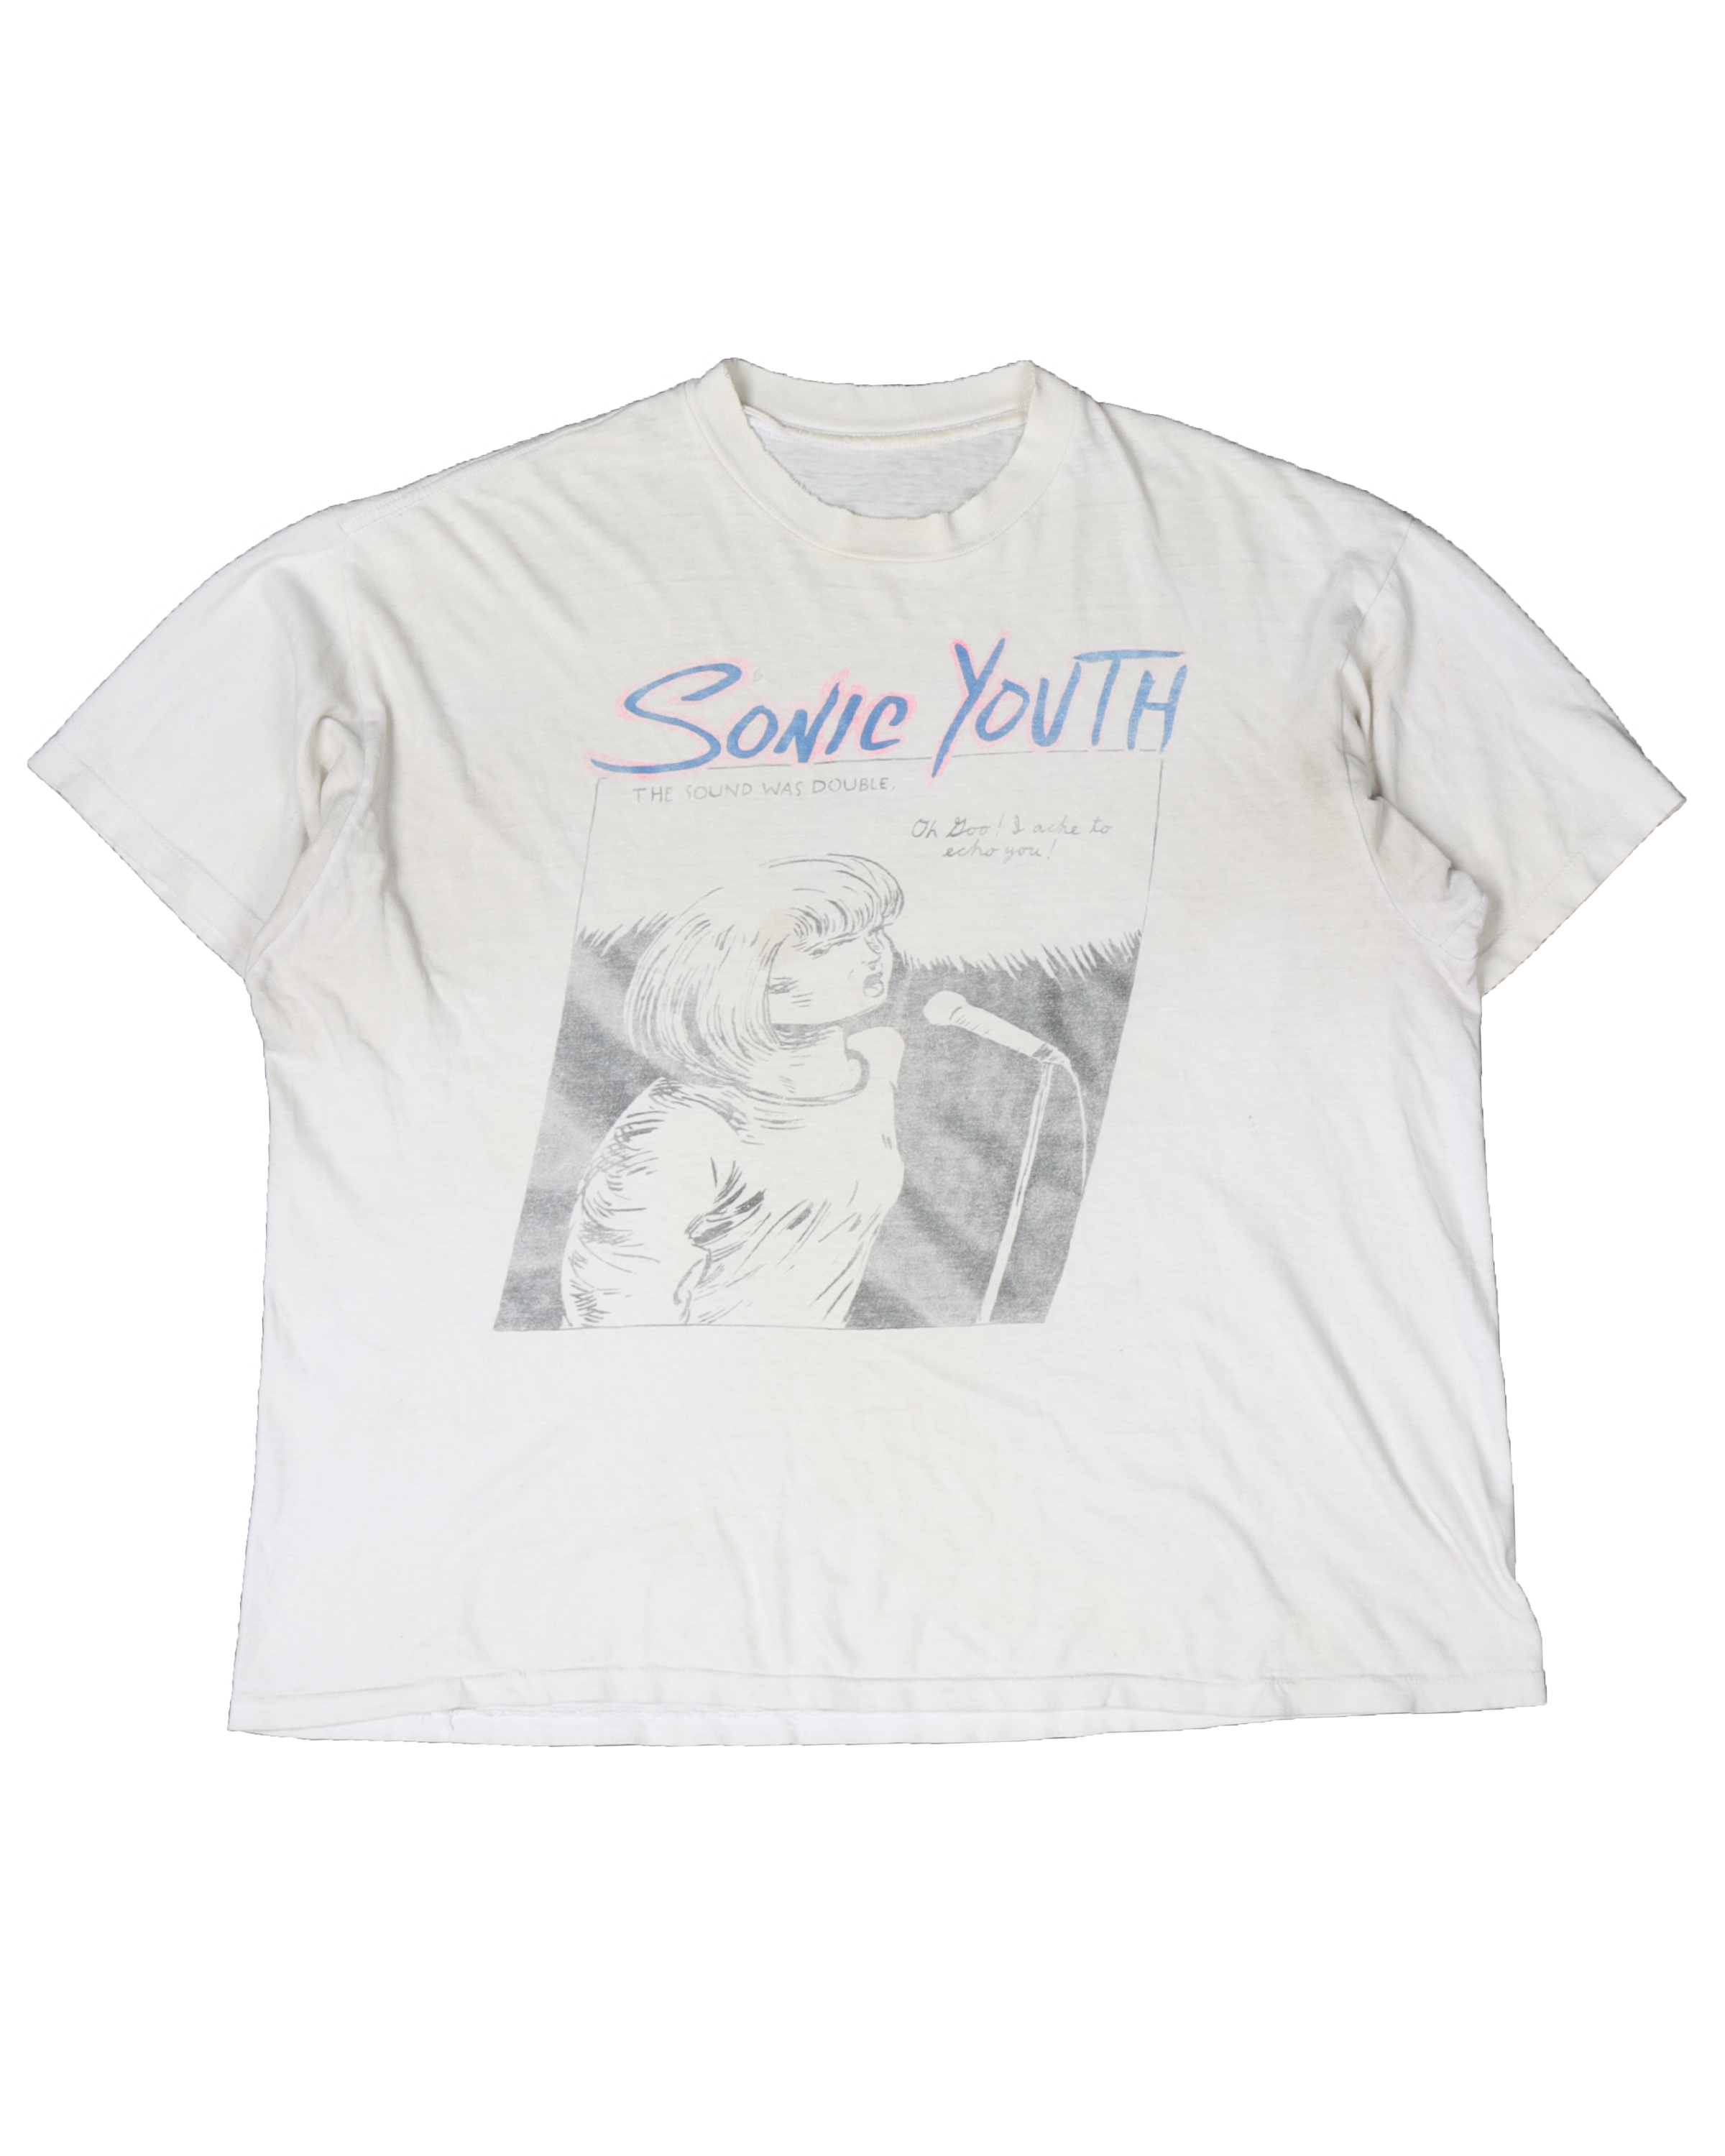 Sonic Youth 1991 "In GOO" T-Shirt by Raymond Pettibon (Euro Verison)